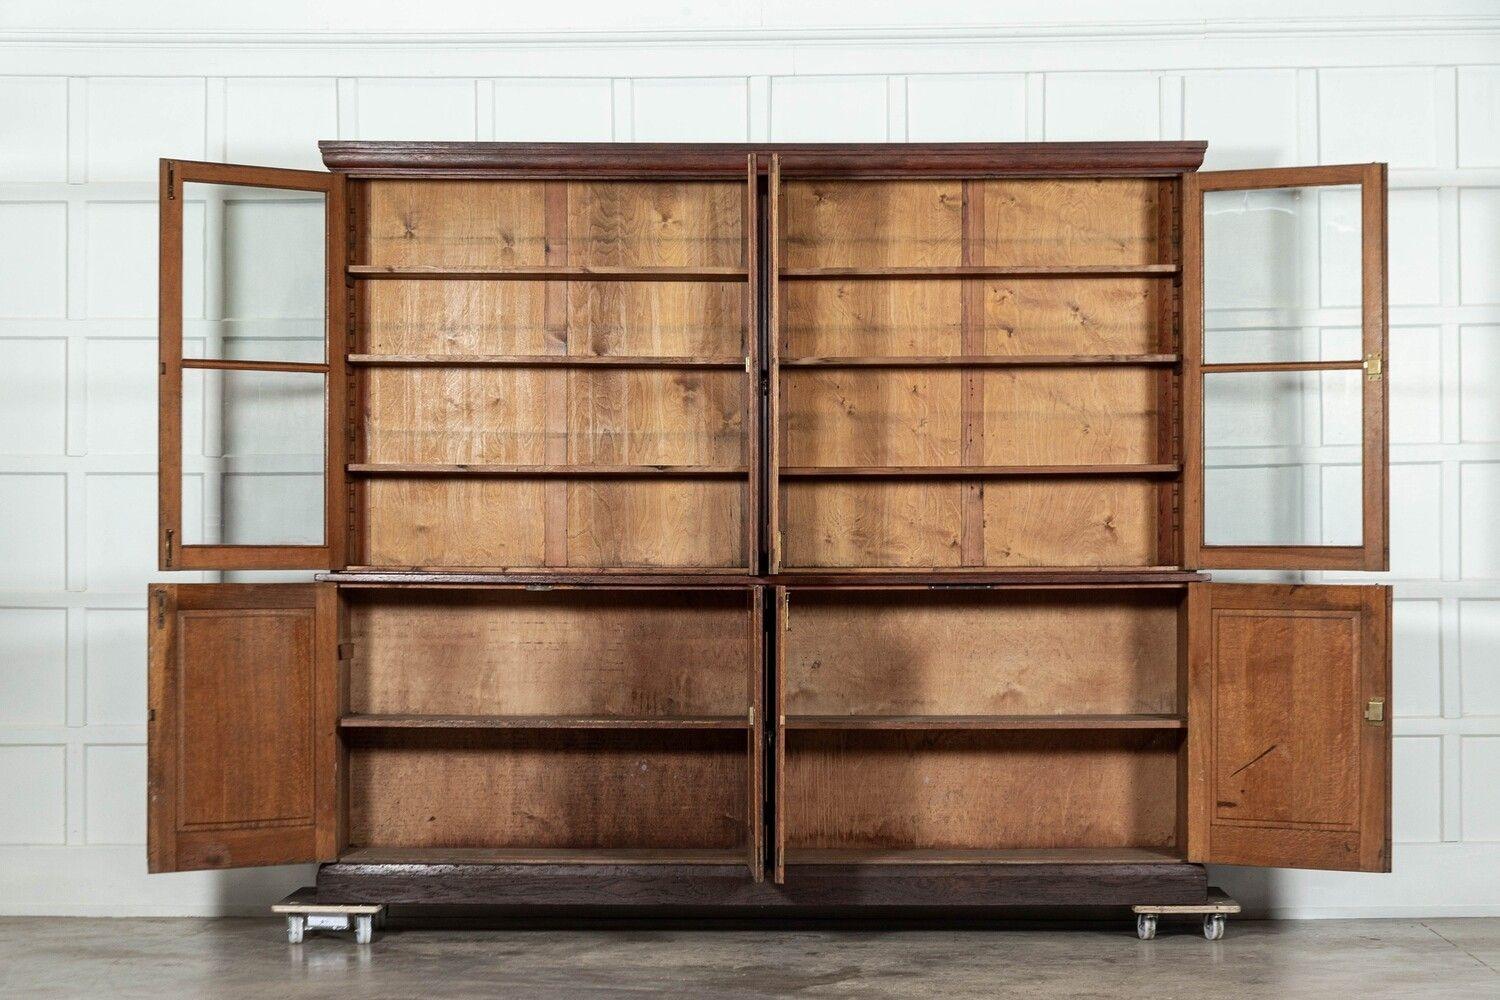 circa 1900
Monumental English Oak Glazed Bookcase
sku 1665
Base W249 x D49 x H92 cm
Top W251 x D34 x H122 cm
Together W251 x D49 x H214 cm